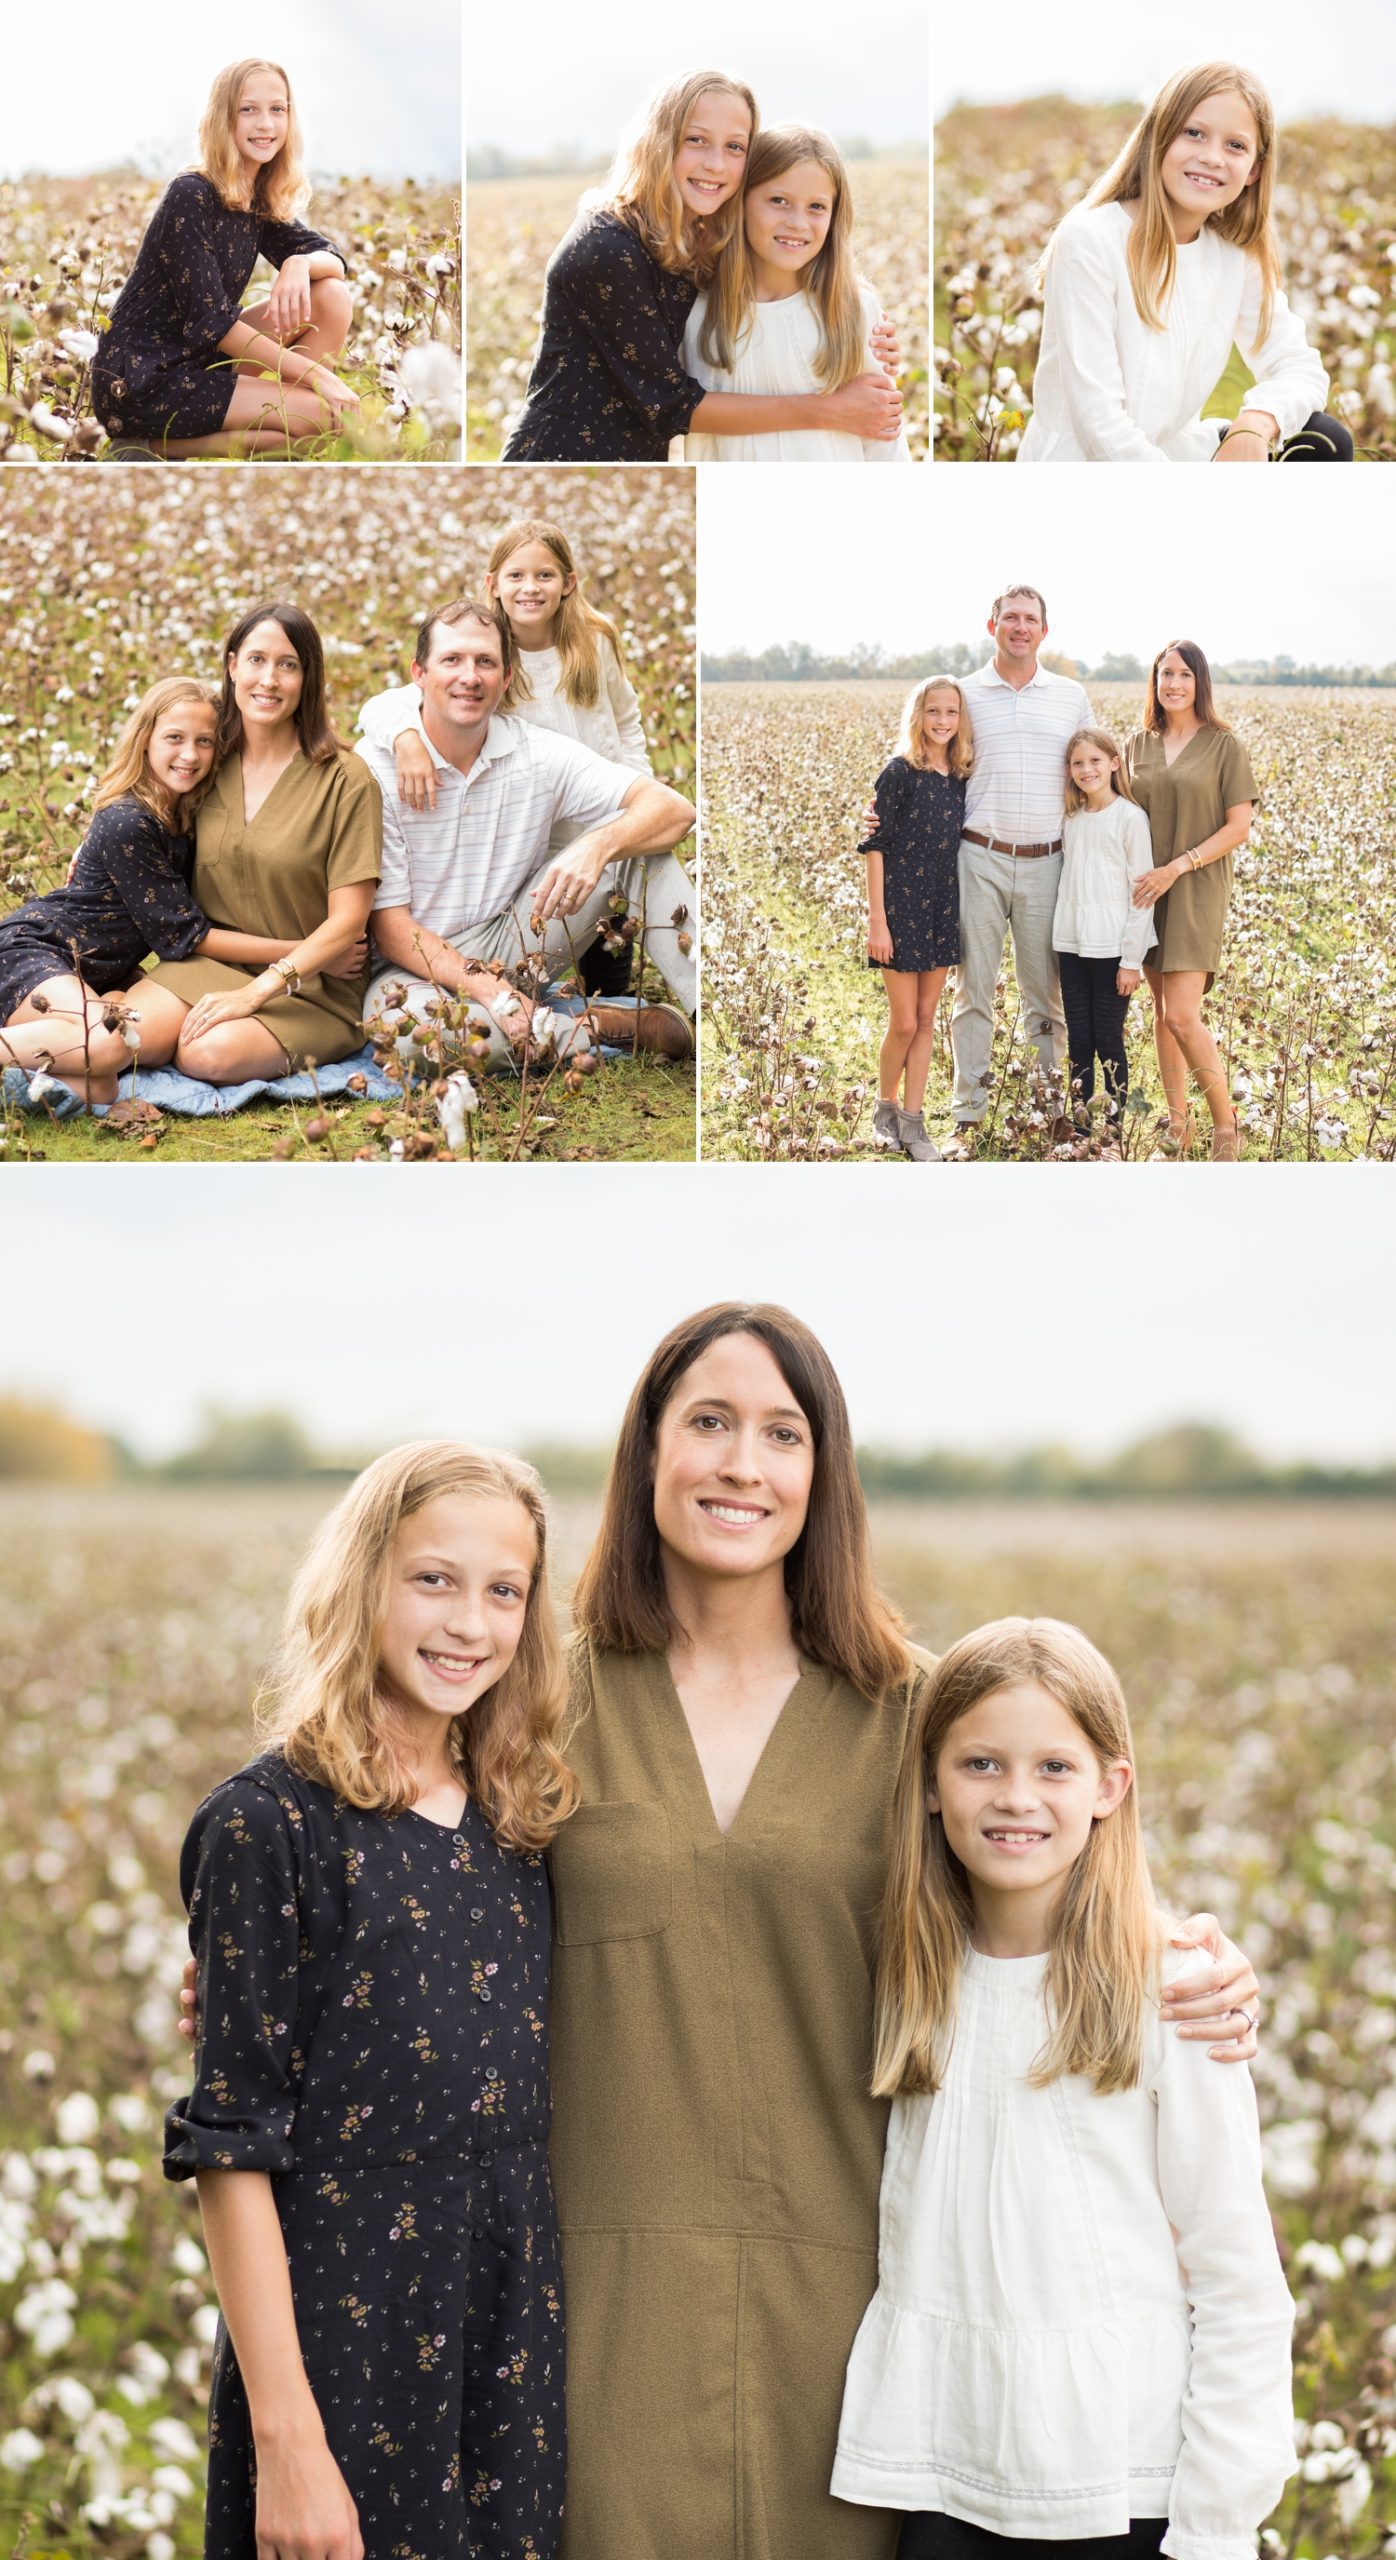 Fall mini photo family portrait session in Tennessee cotton field